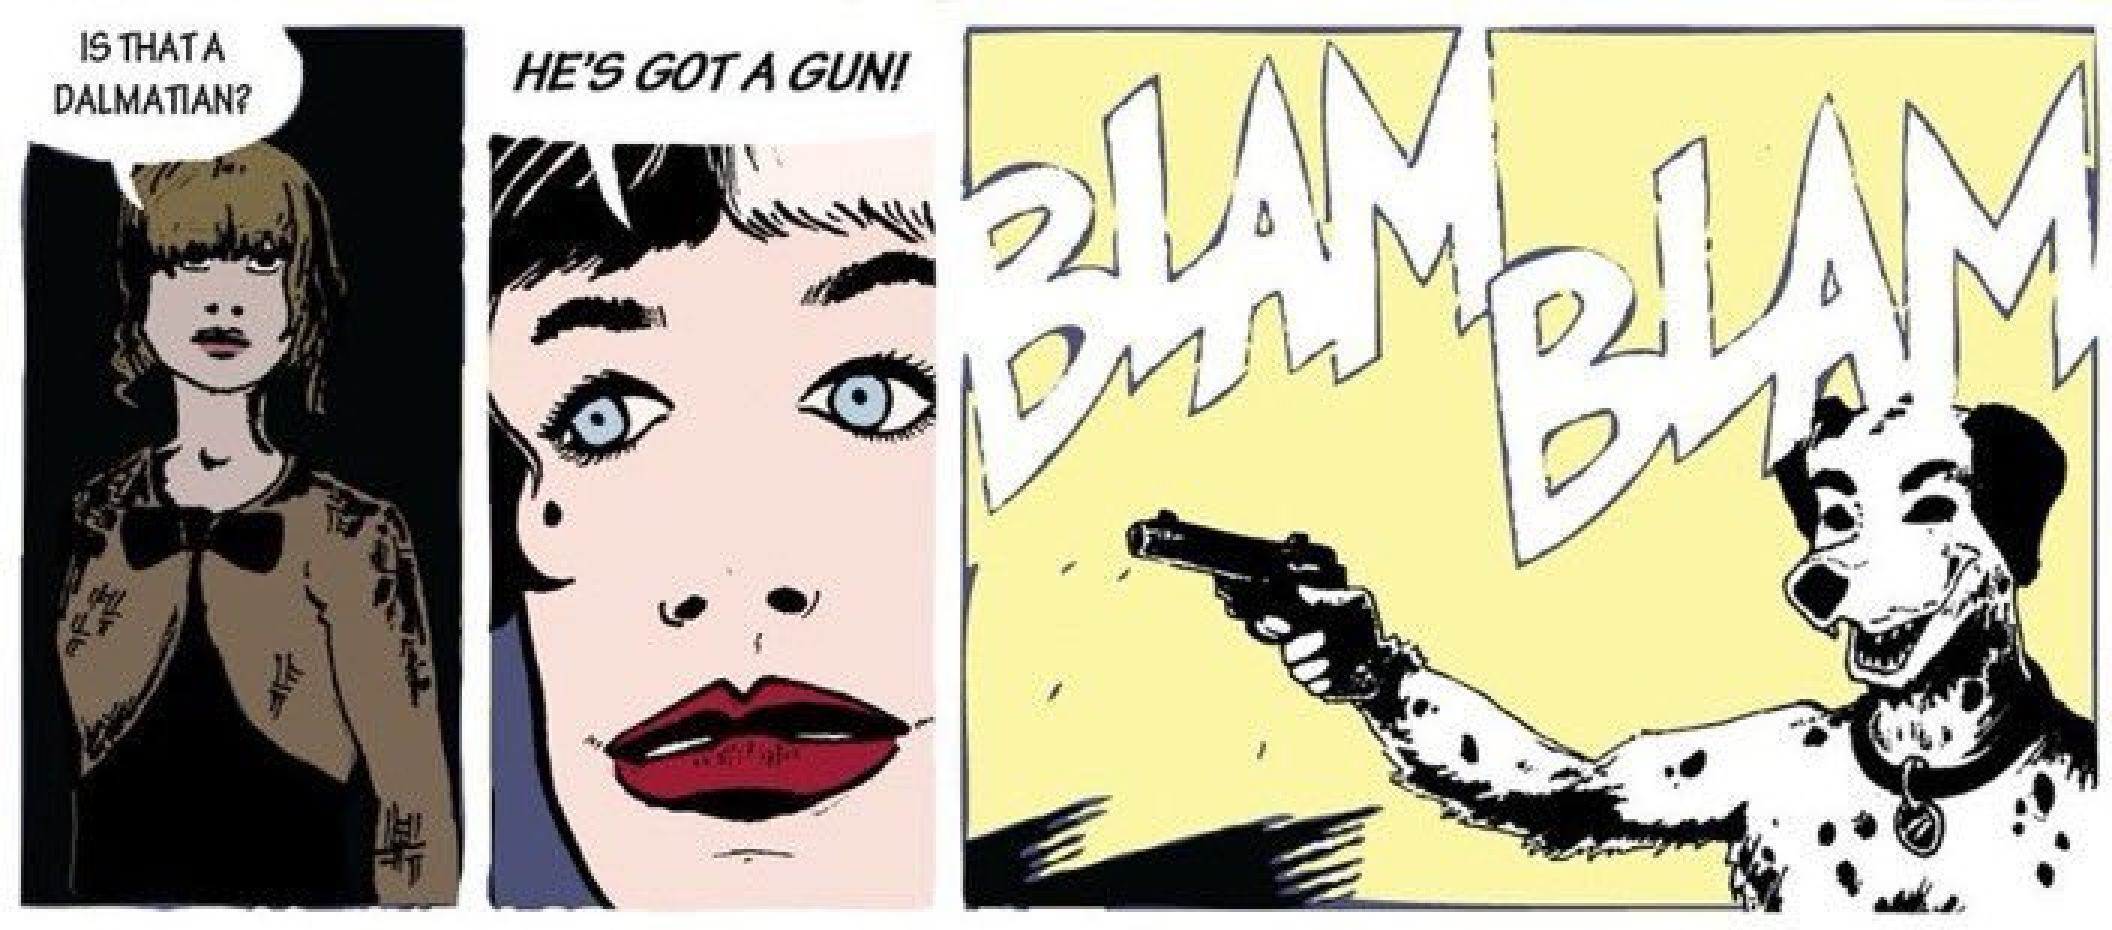 Dalmation with a gun comic.